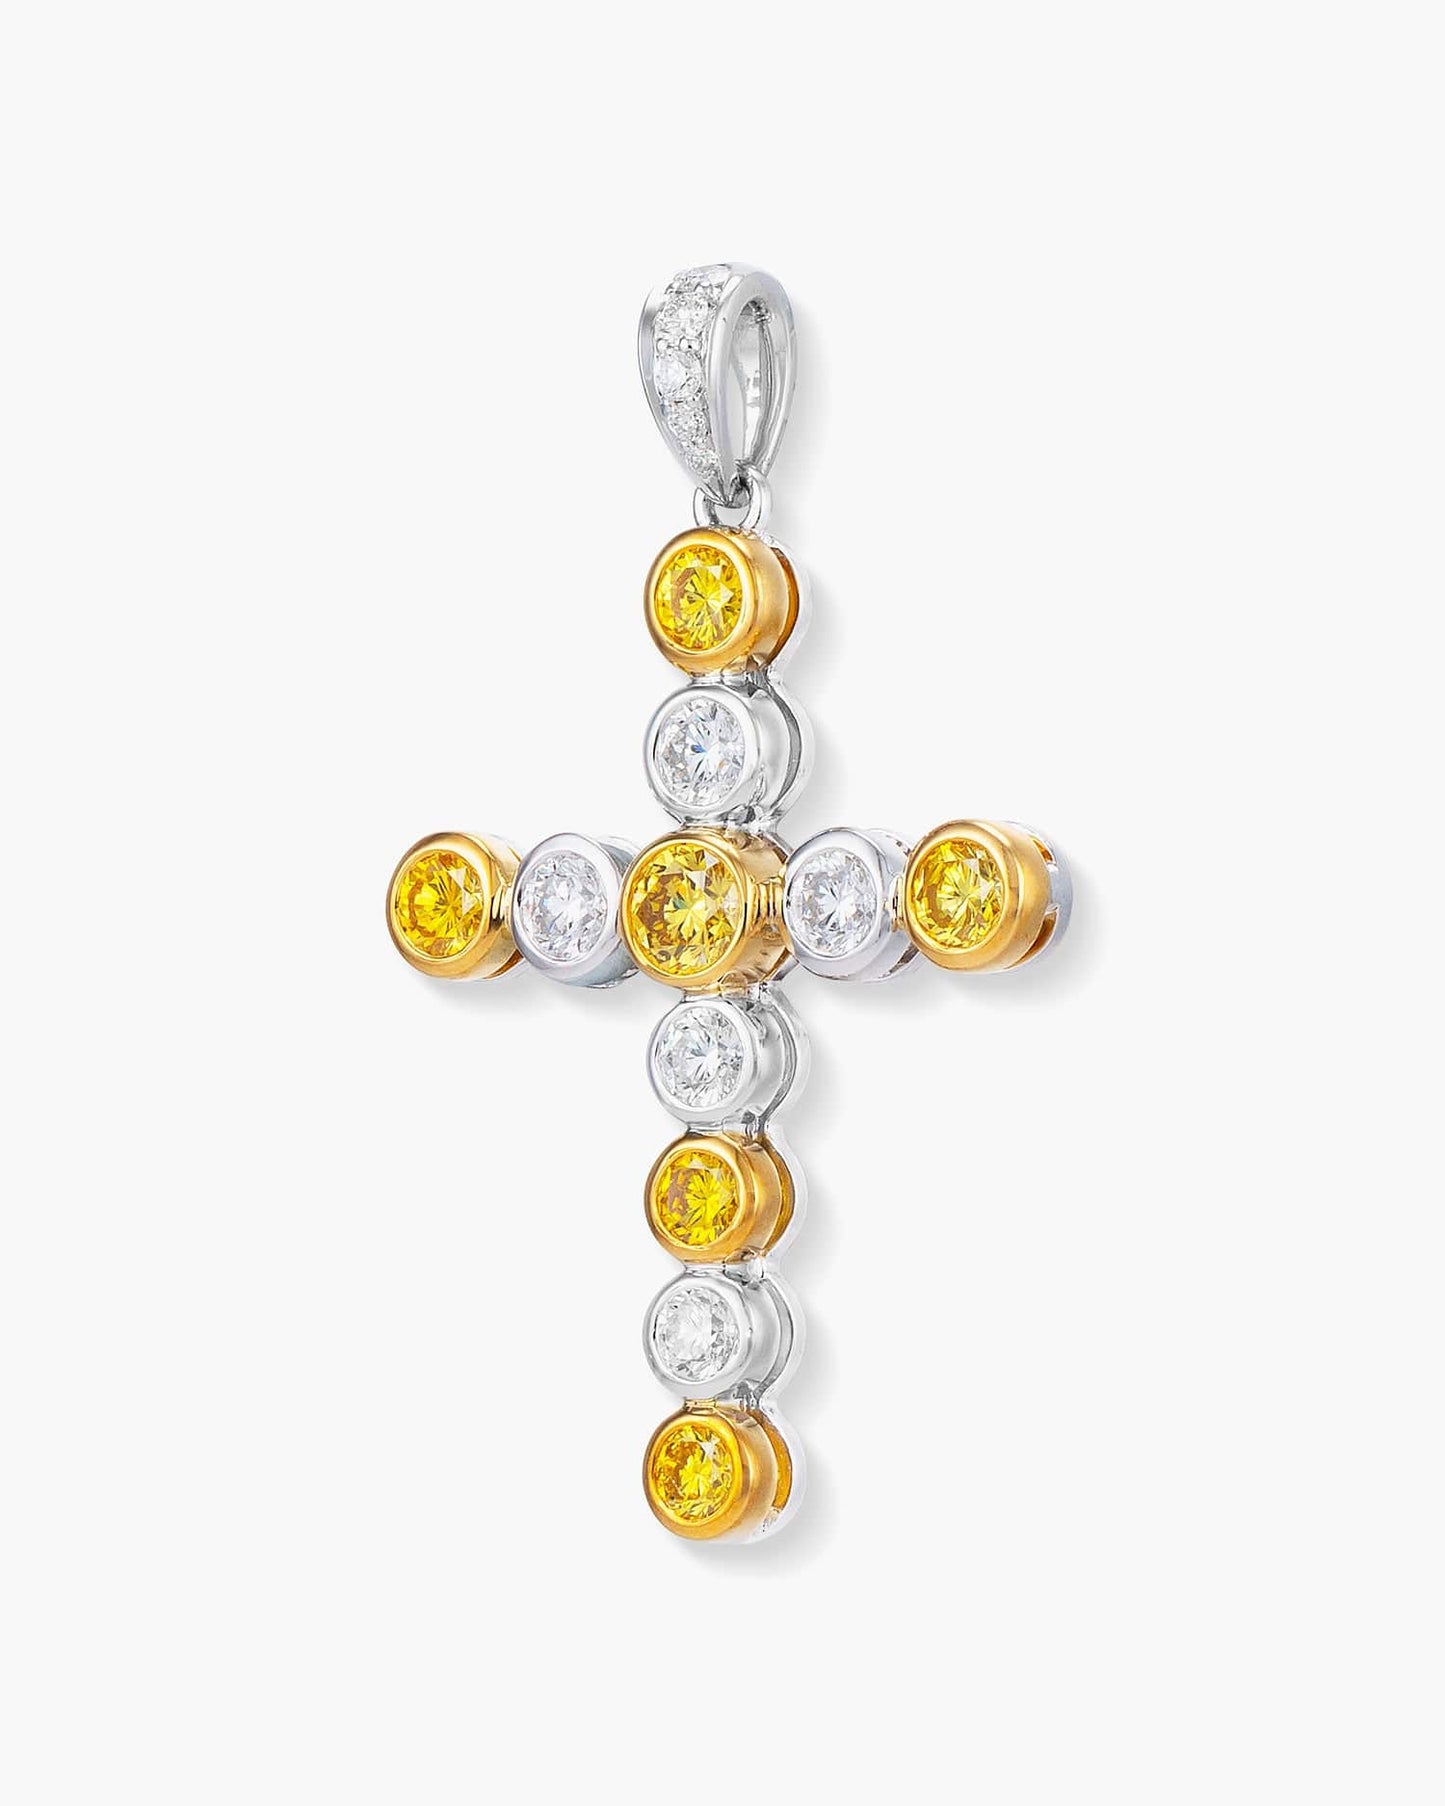 Yellow and White Diamond Cross Pendant Necklace, 1.31 carats